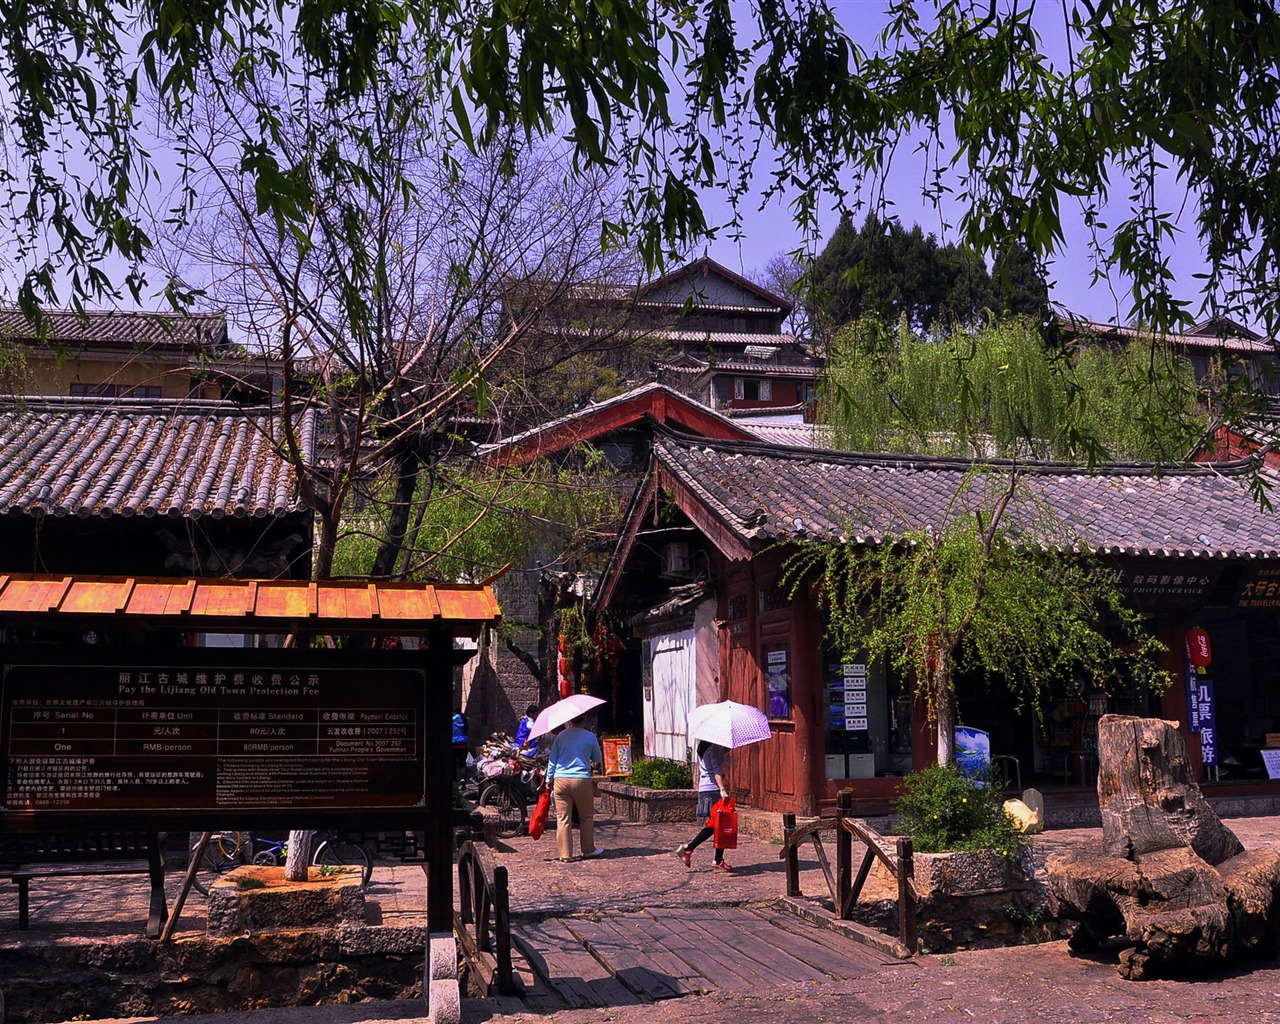 Lijiang ancient town atmosphere (2) (old Hong OK works) #26 - 1280x1024